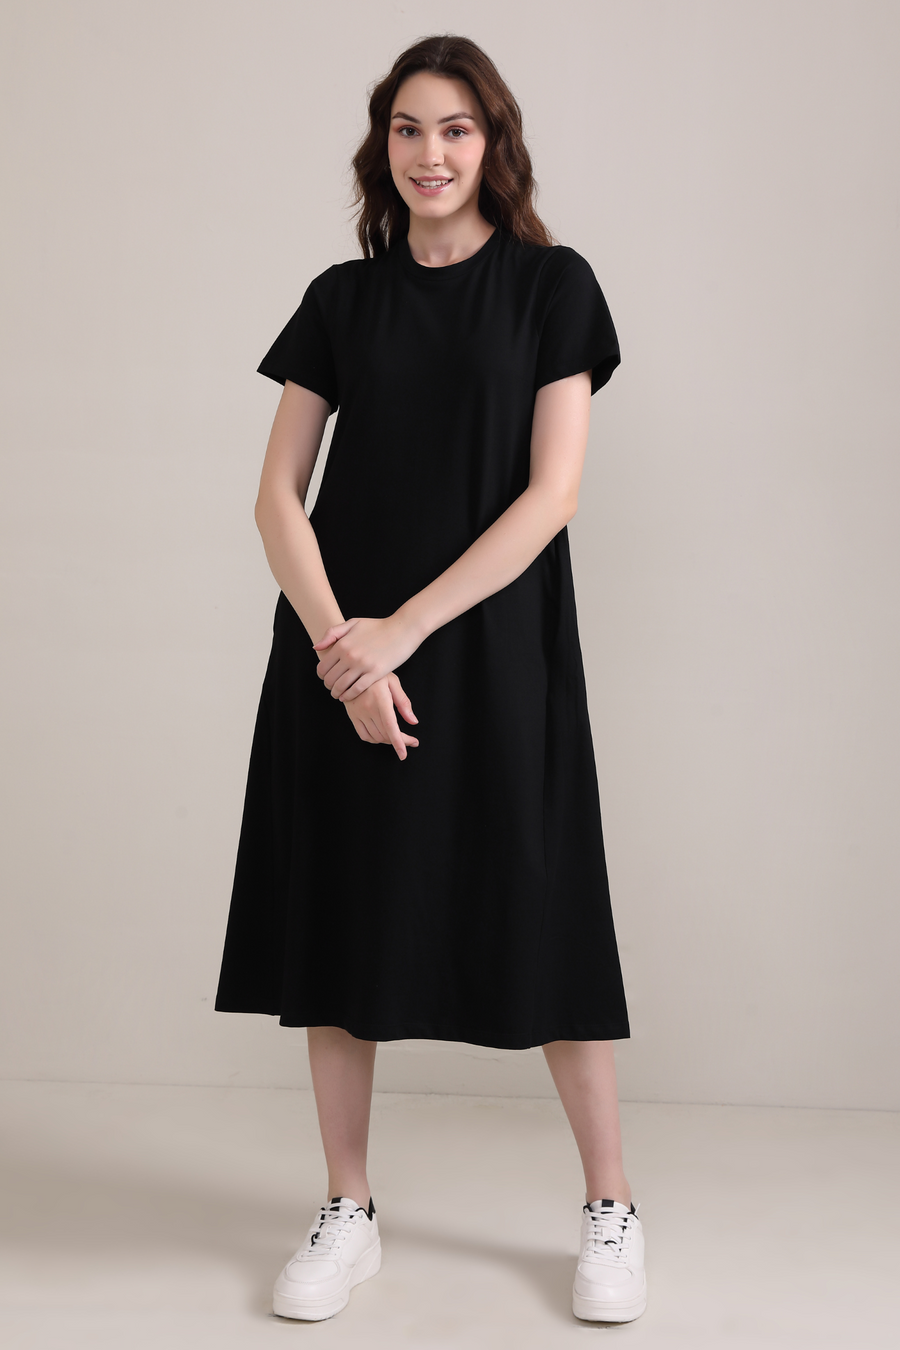 Cotton A line Short Sleeve Dress-Black